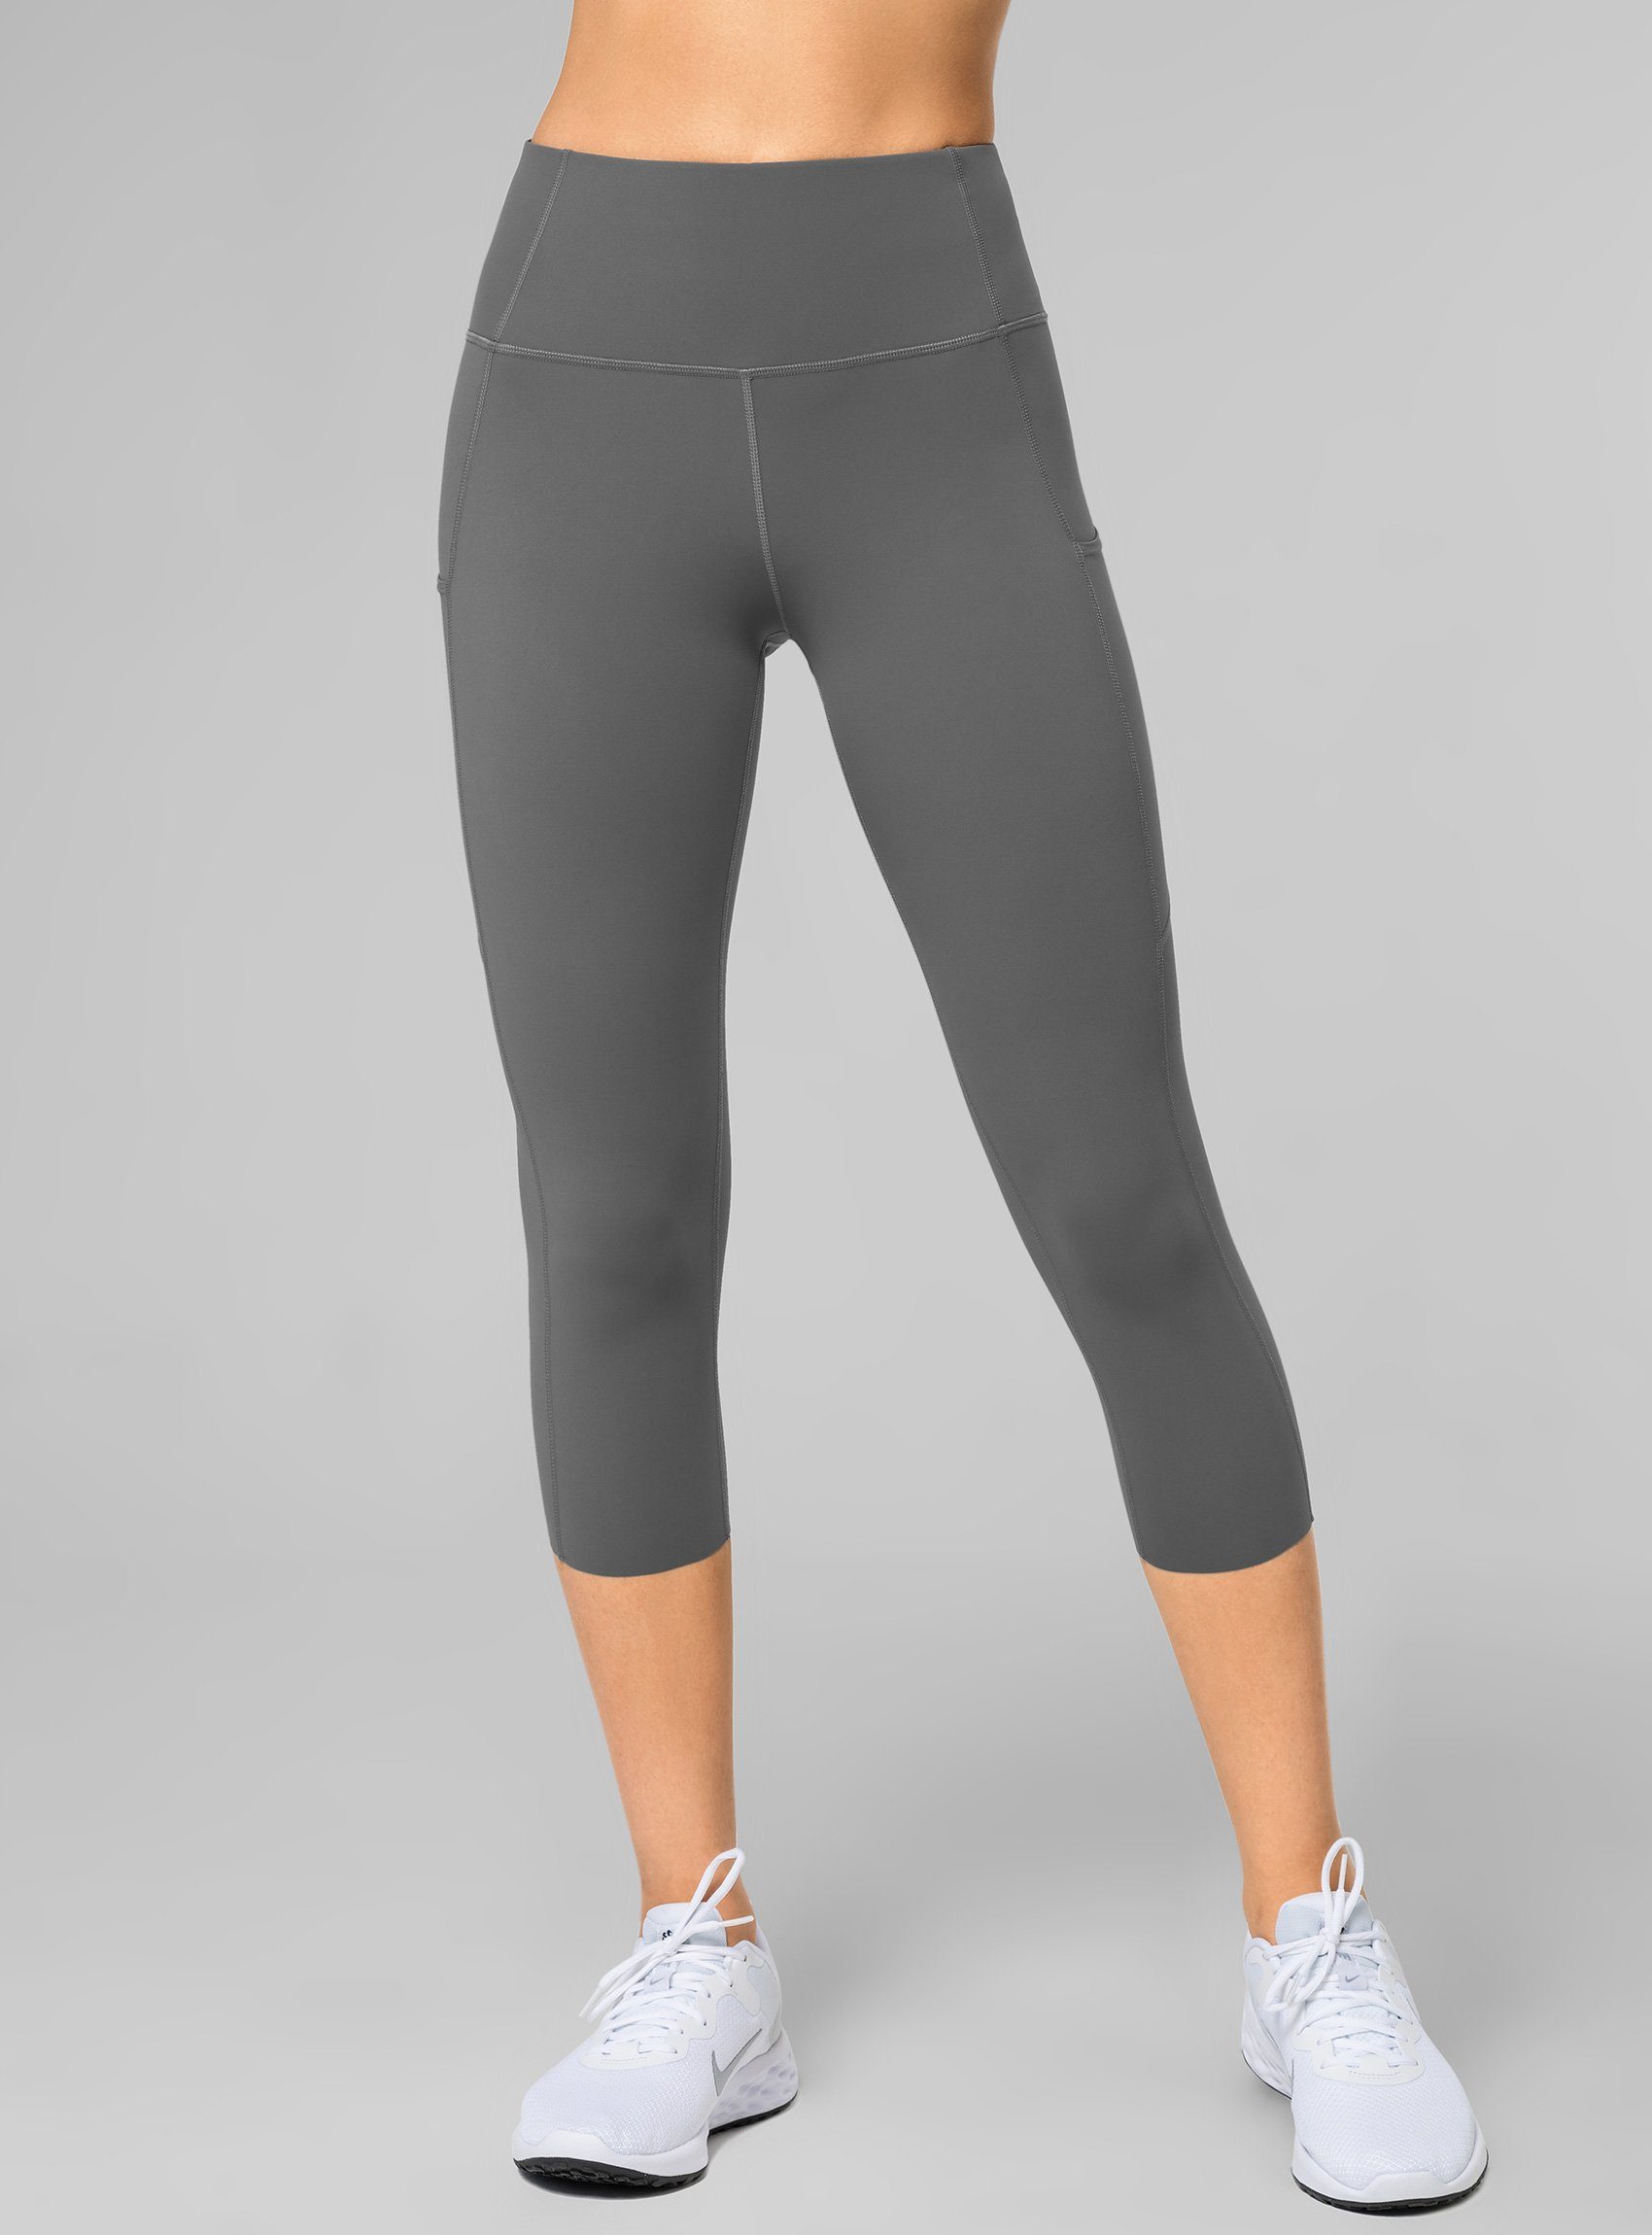 Yvette Caprileggings Damen 3/4 leggings Sport Grau Tasche, waist, E110419A06 mit high